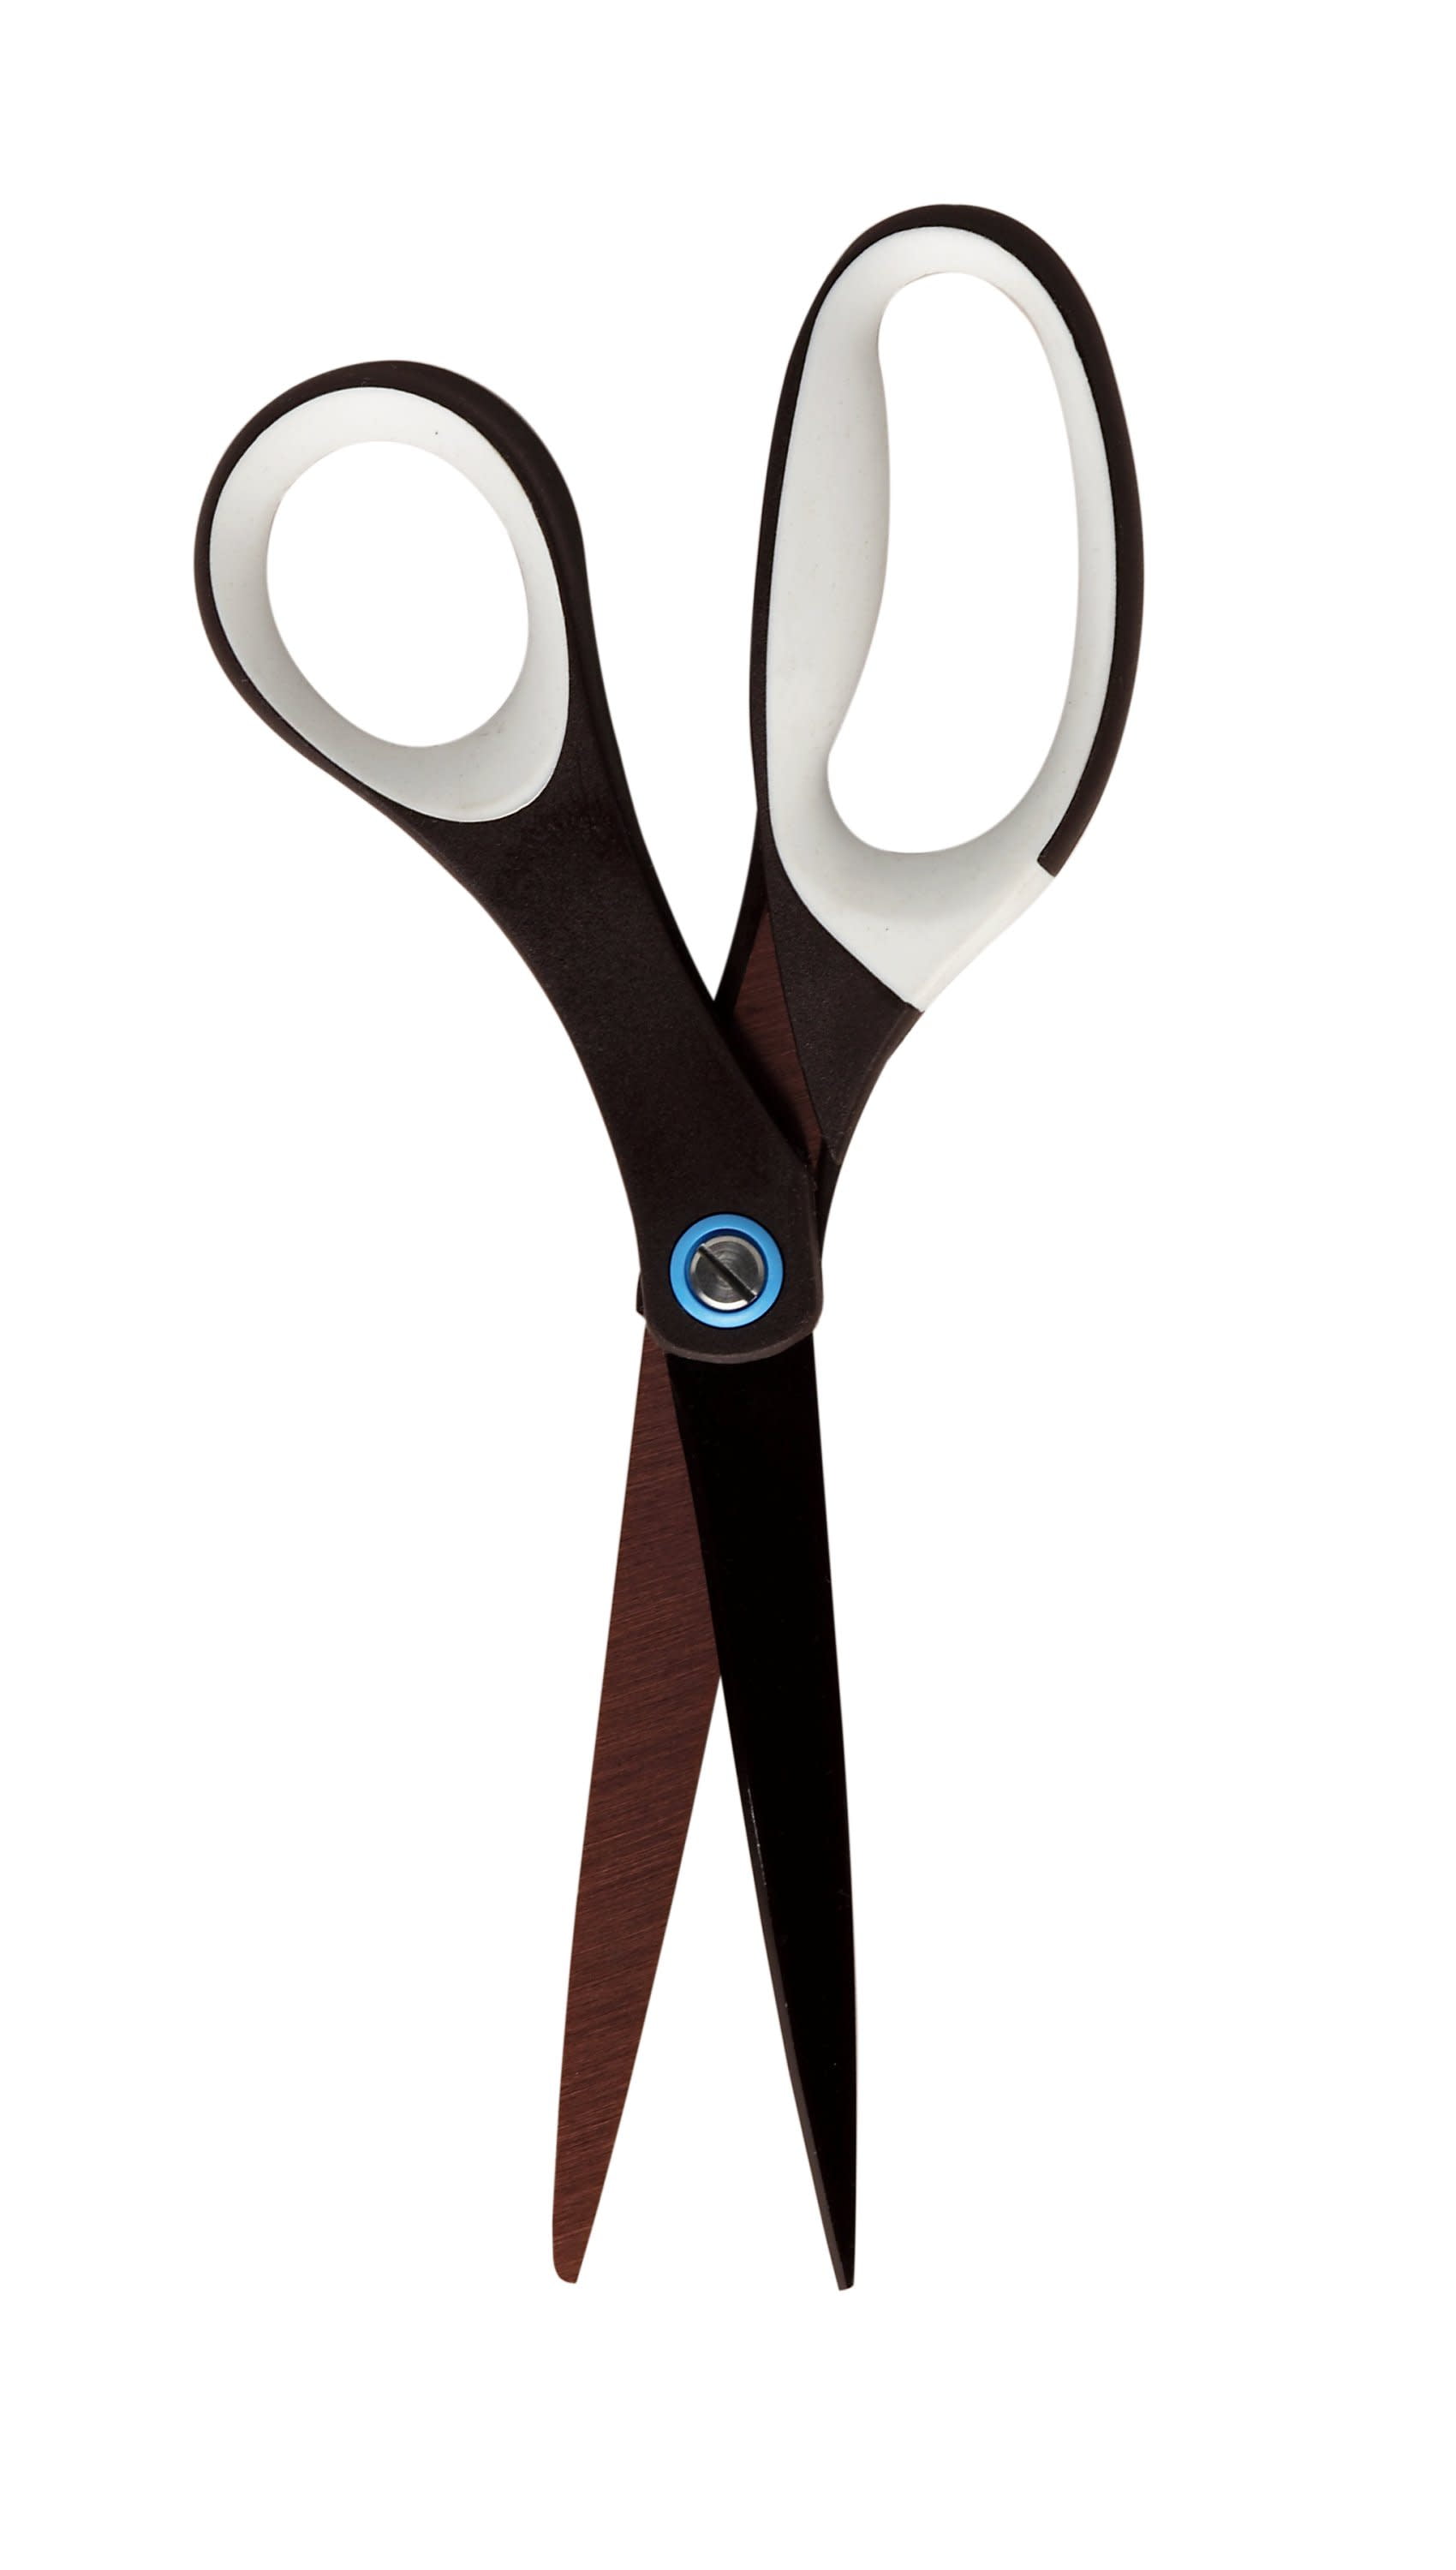 Scotch™ Precision Ultra Edge Titanium Scissors